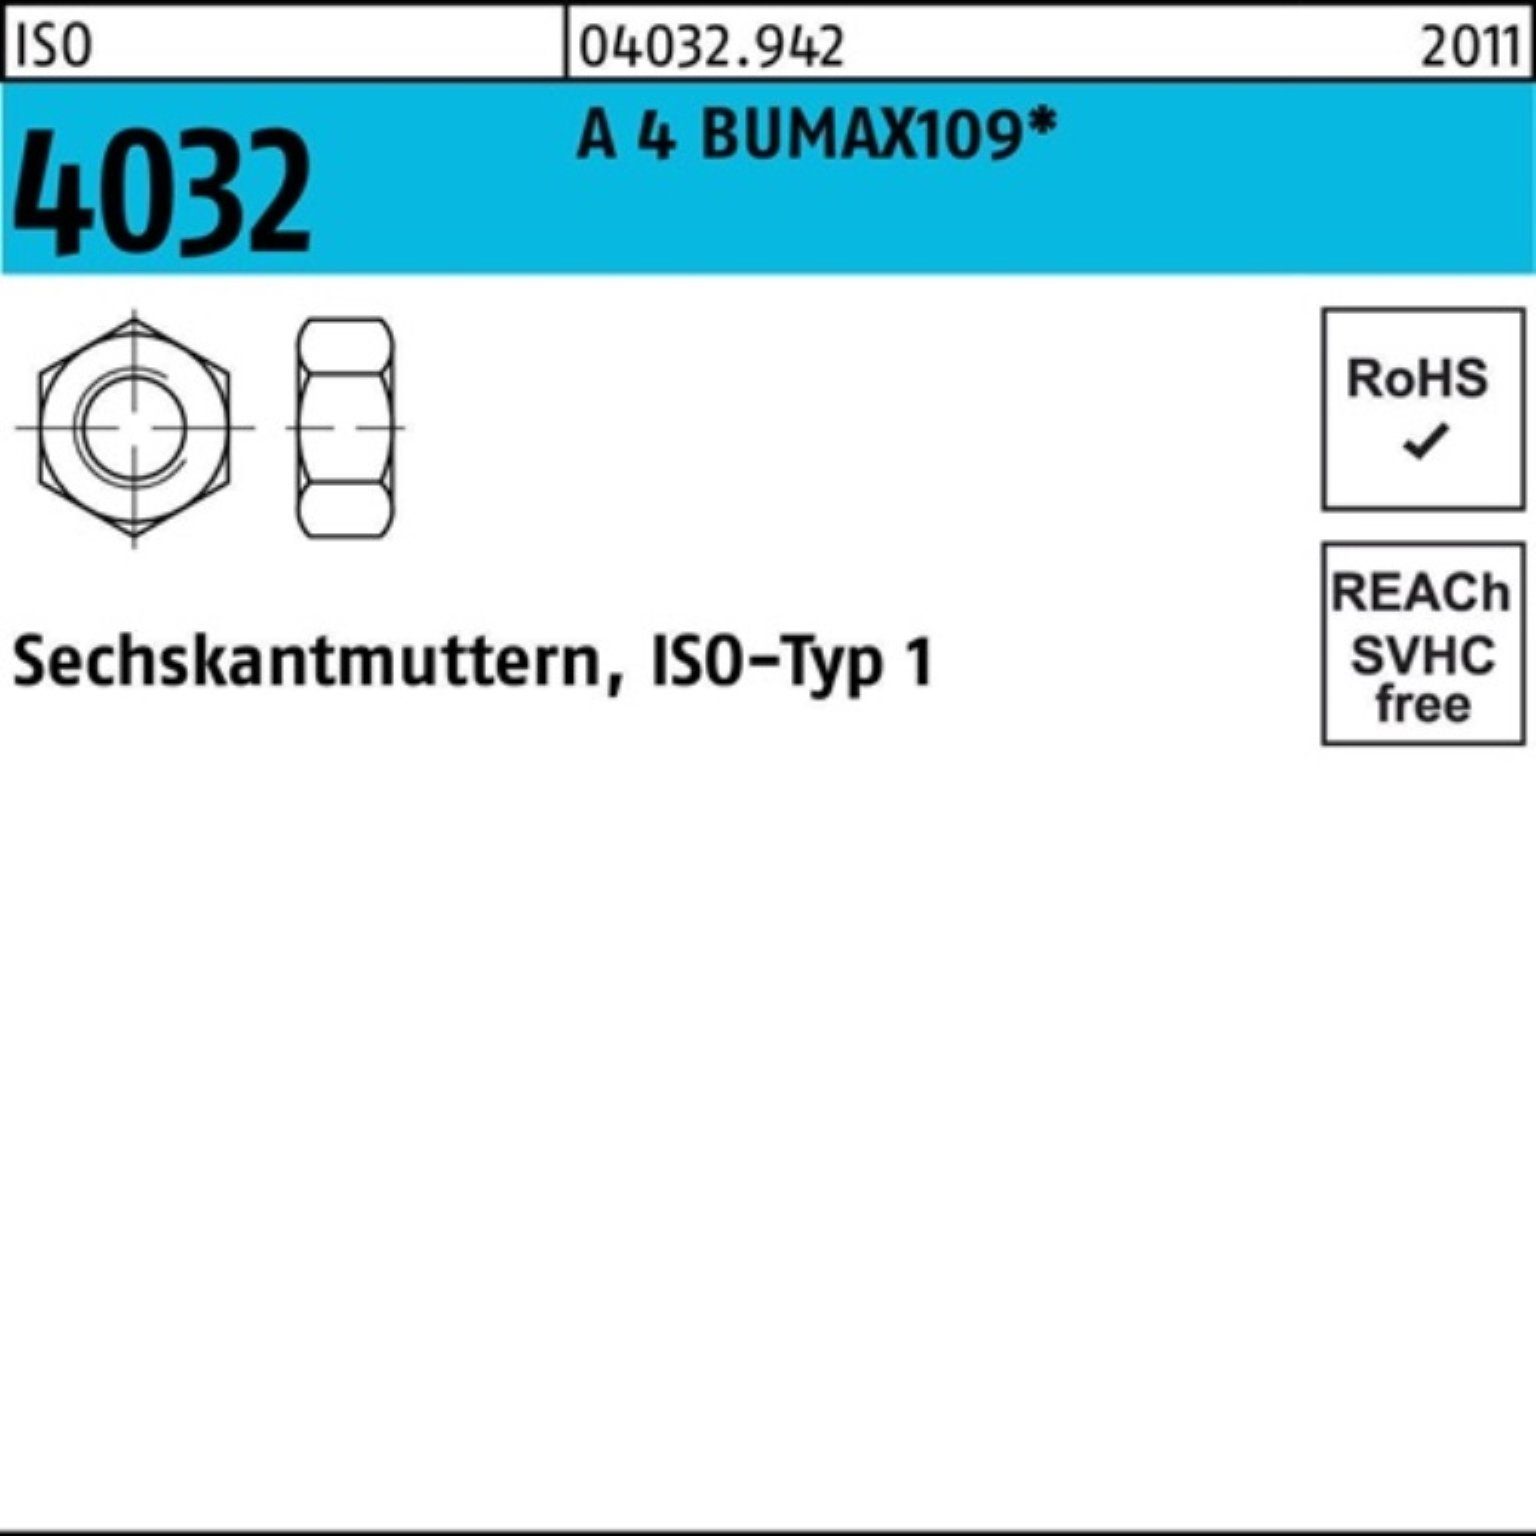 Pack Bufab Stück 4032 4 A BUMAX109 Sechskantmutter 100er M10 I 50 ISO Muttern BUFAB